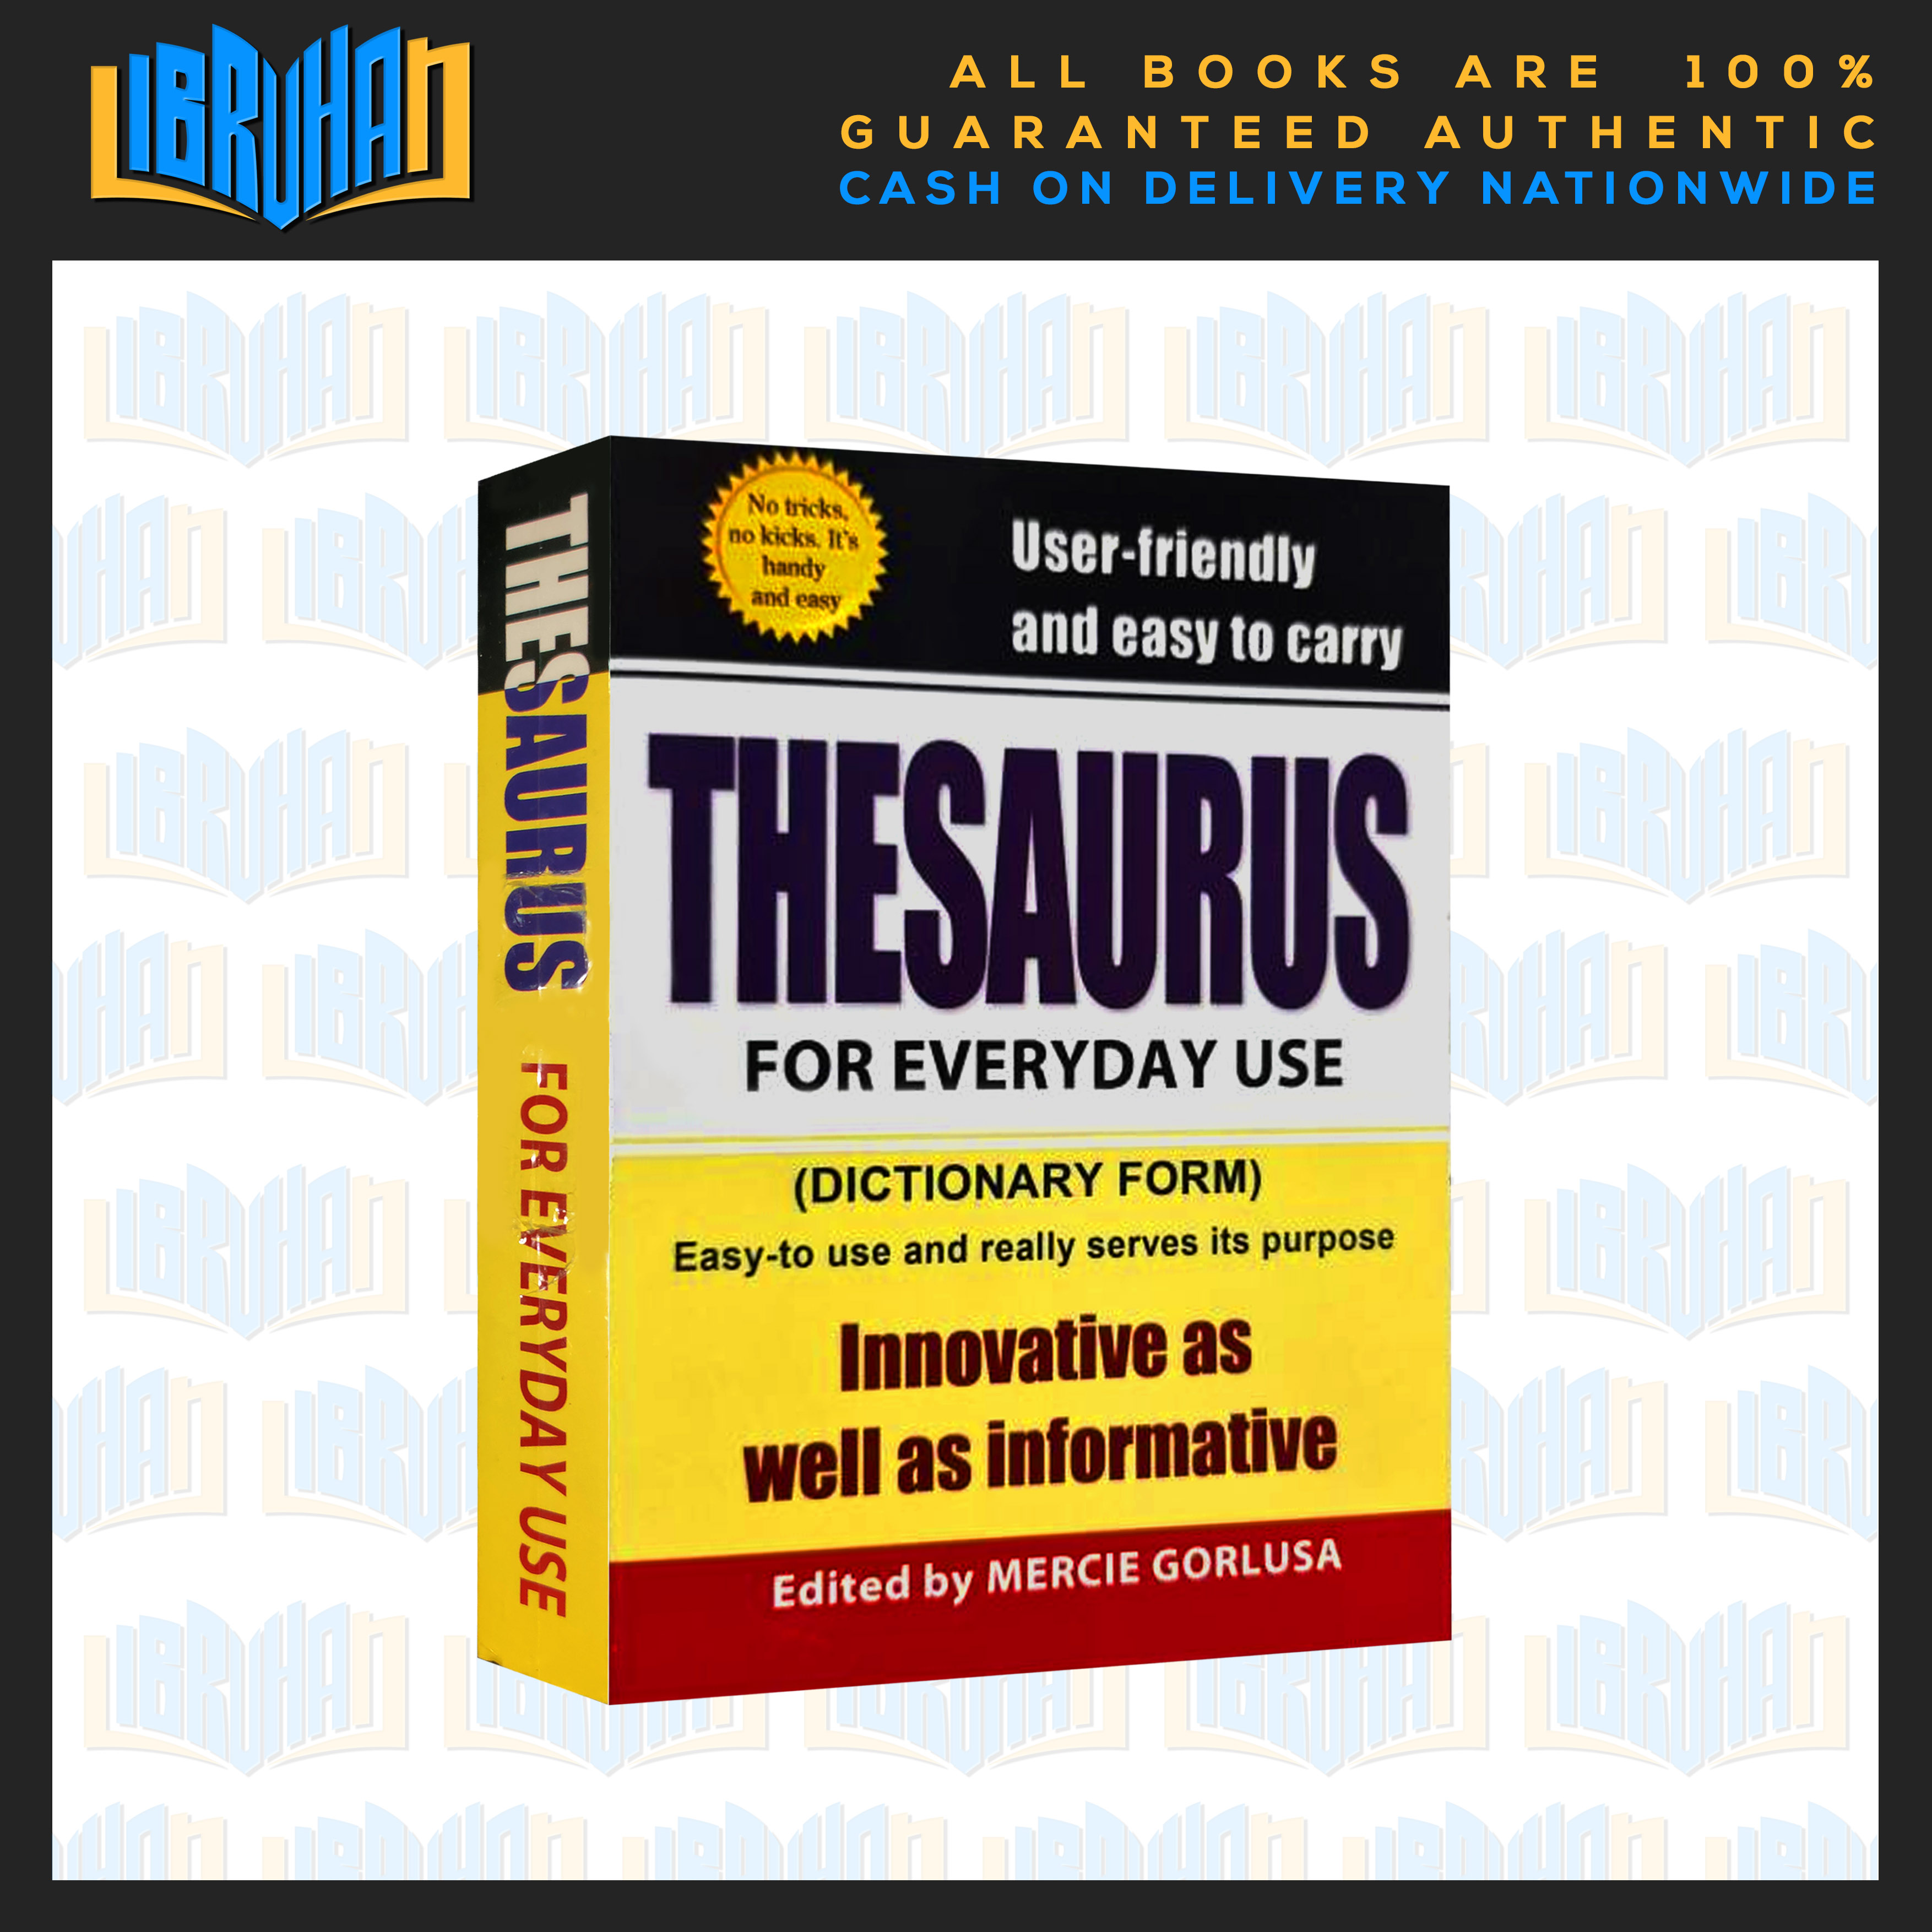 thesaurus clip art